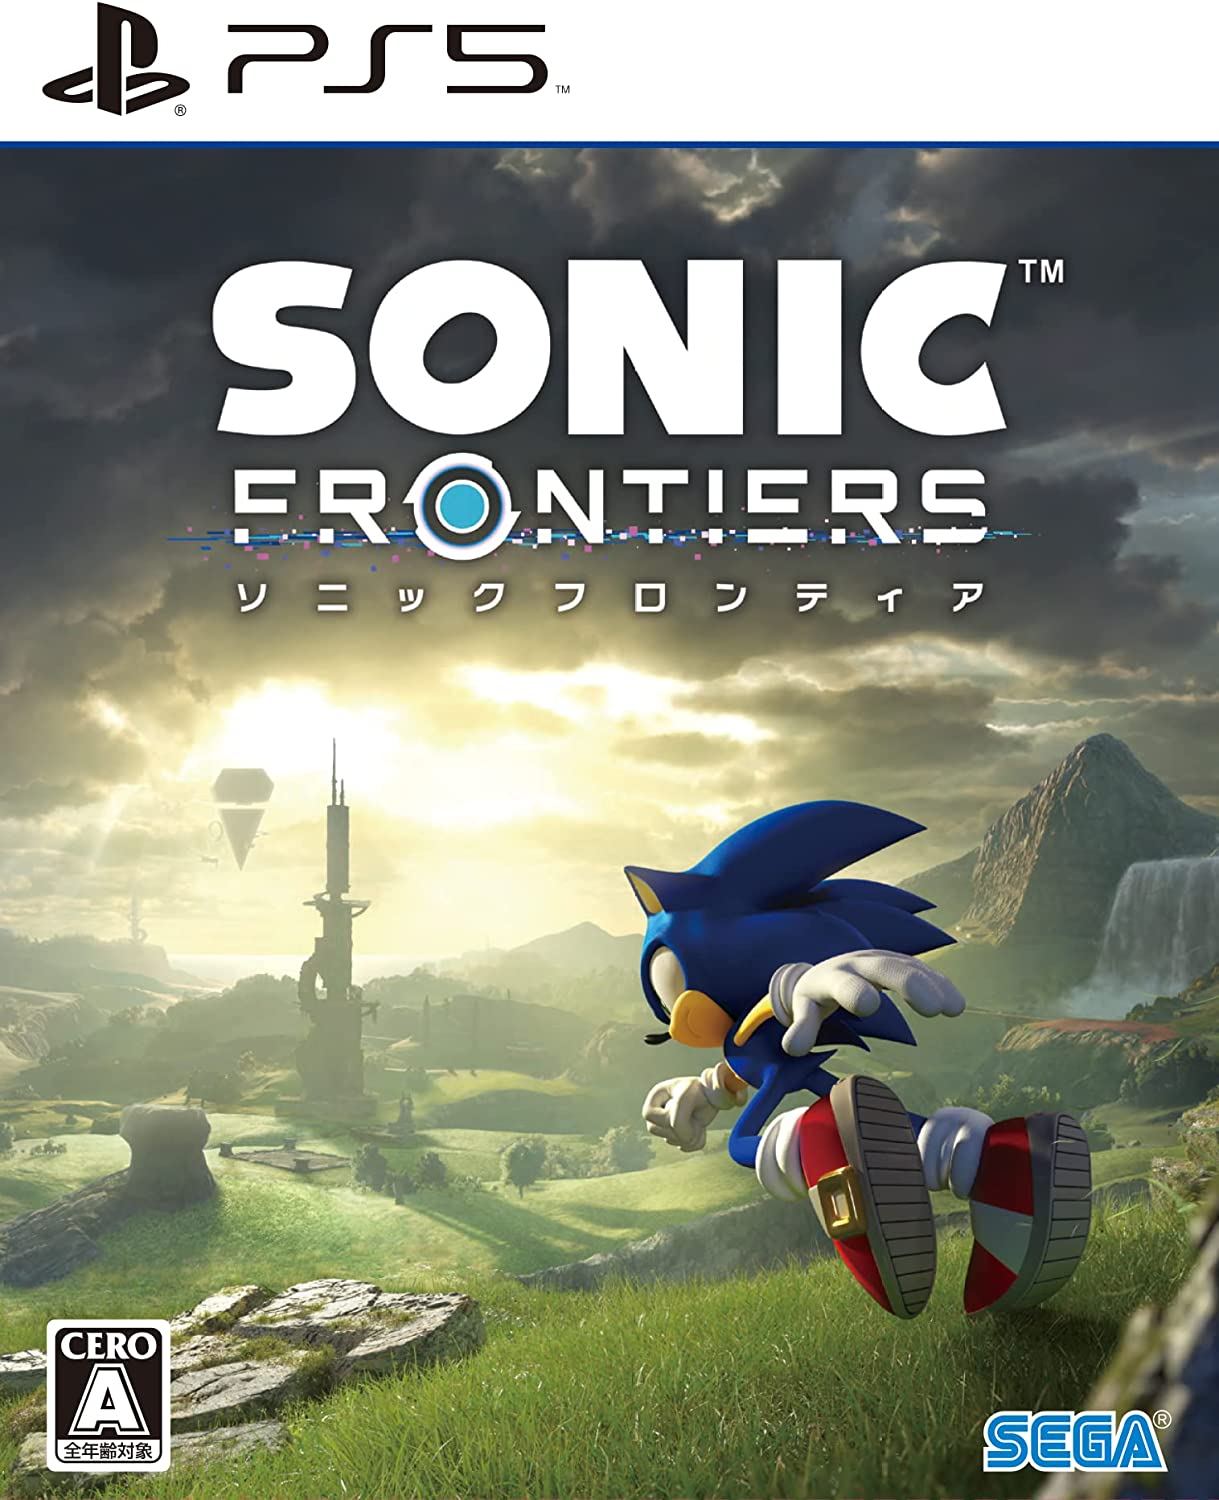 Comprar o Sonic Frontiers